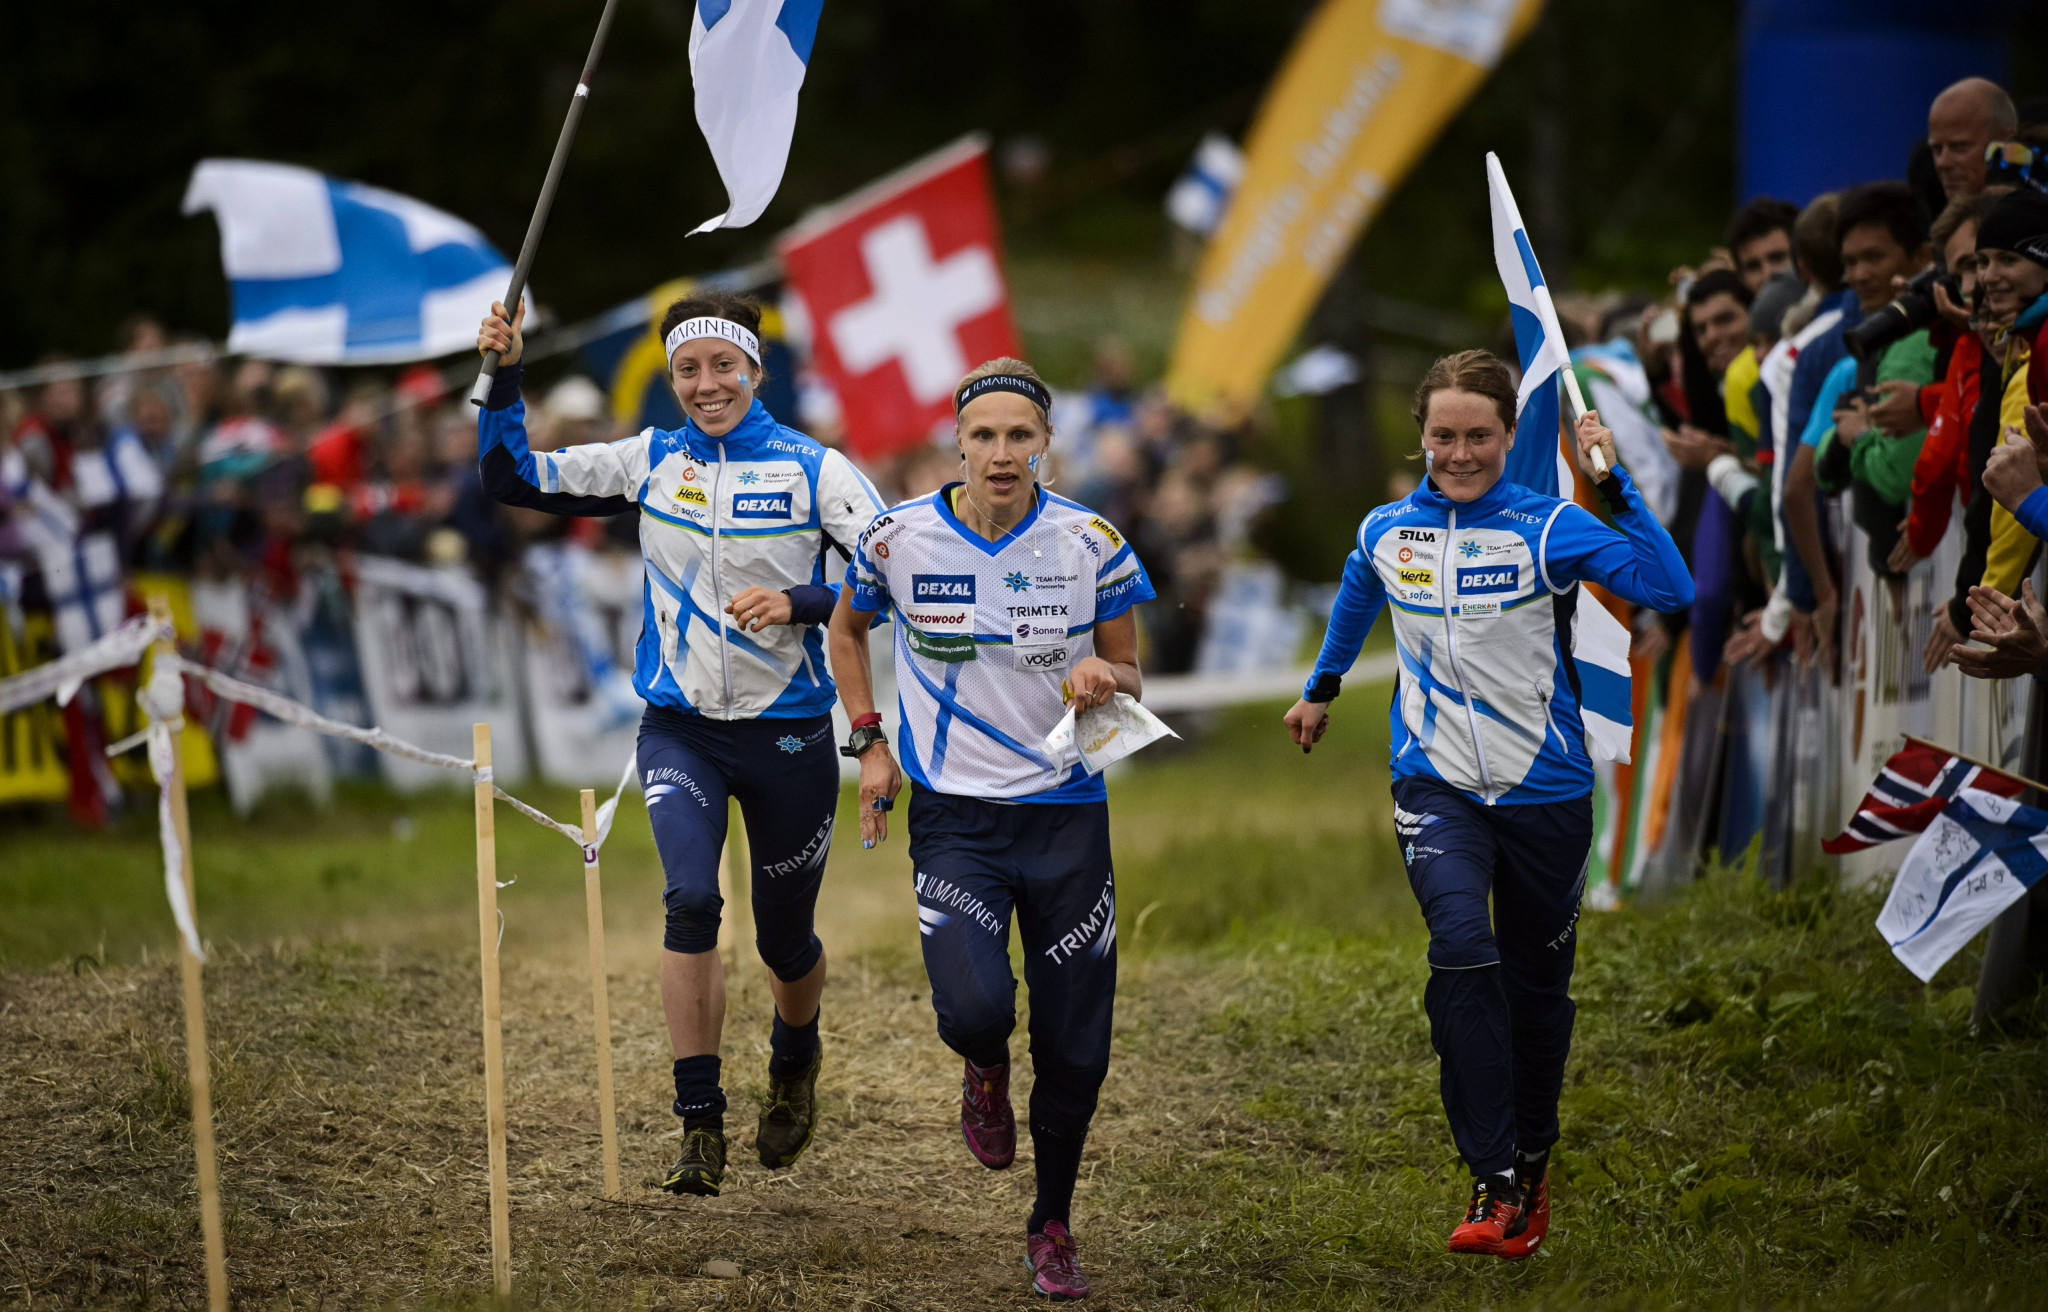 IOF awards 2023 and 2025 World Orienteering Championships to Switzerland and Finland